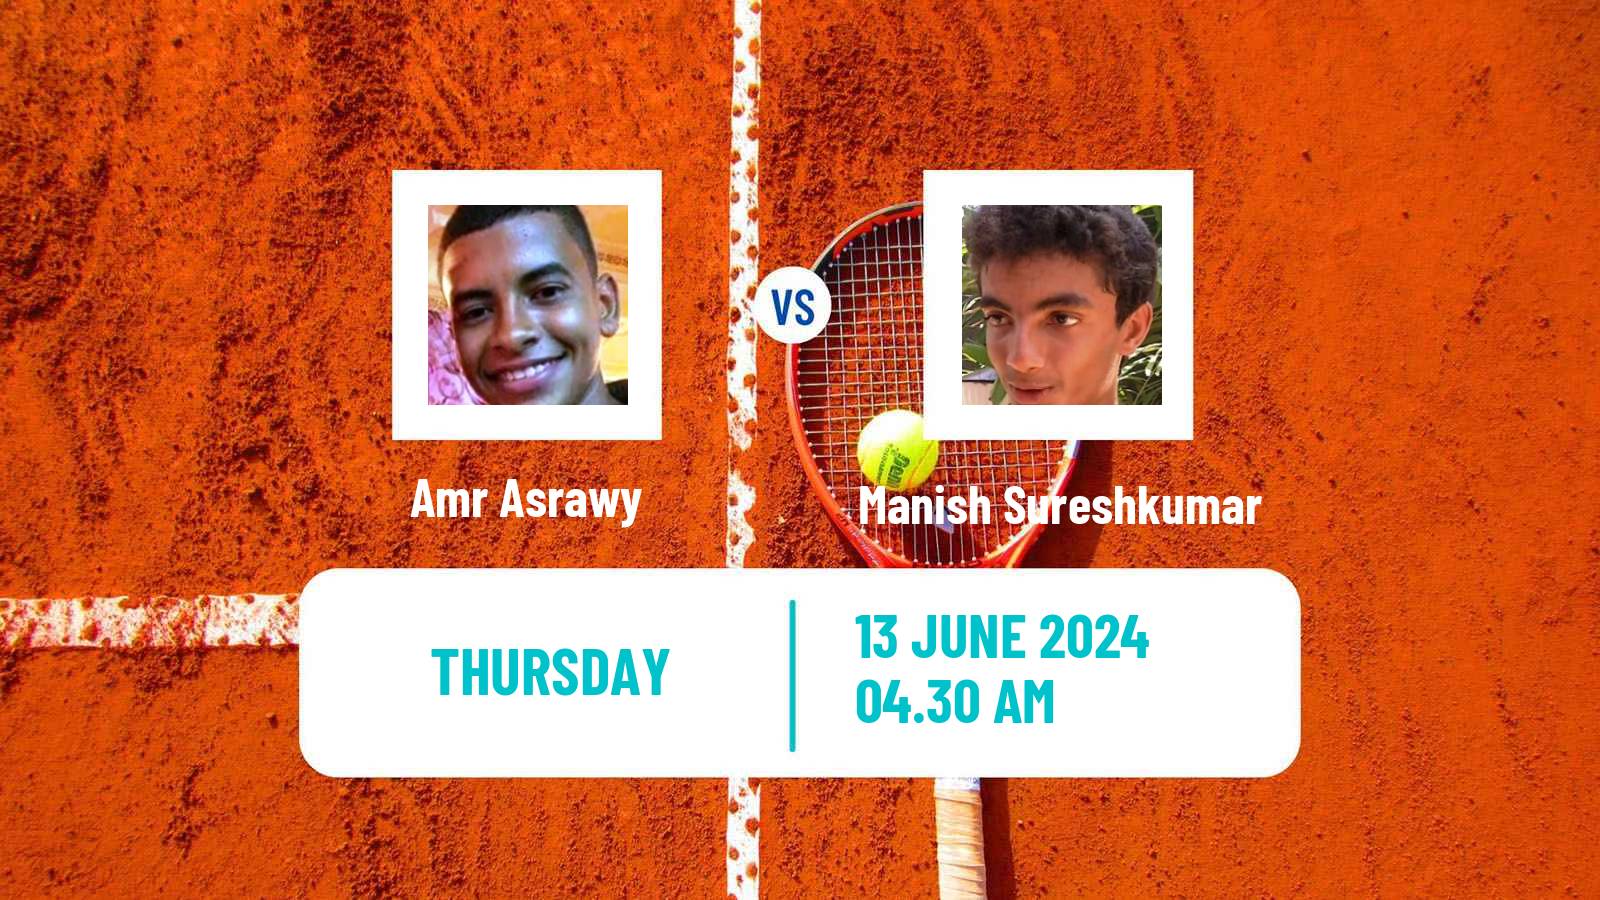 Tennis ITF M15 Monastir 24 Men Amr Asrawy - Manish Sureshkumar